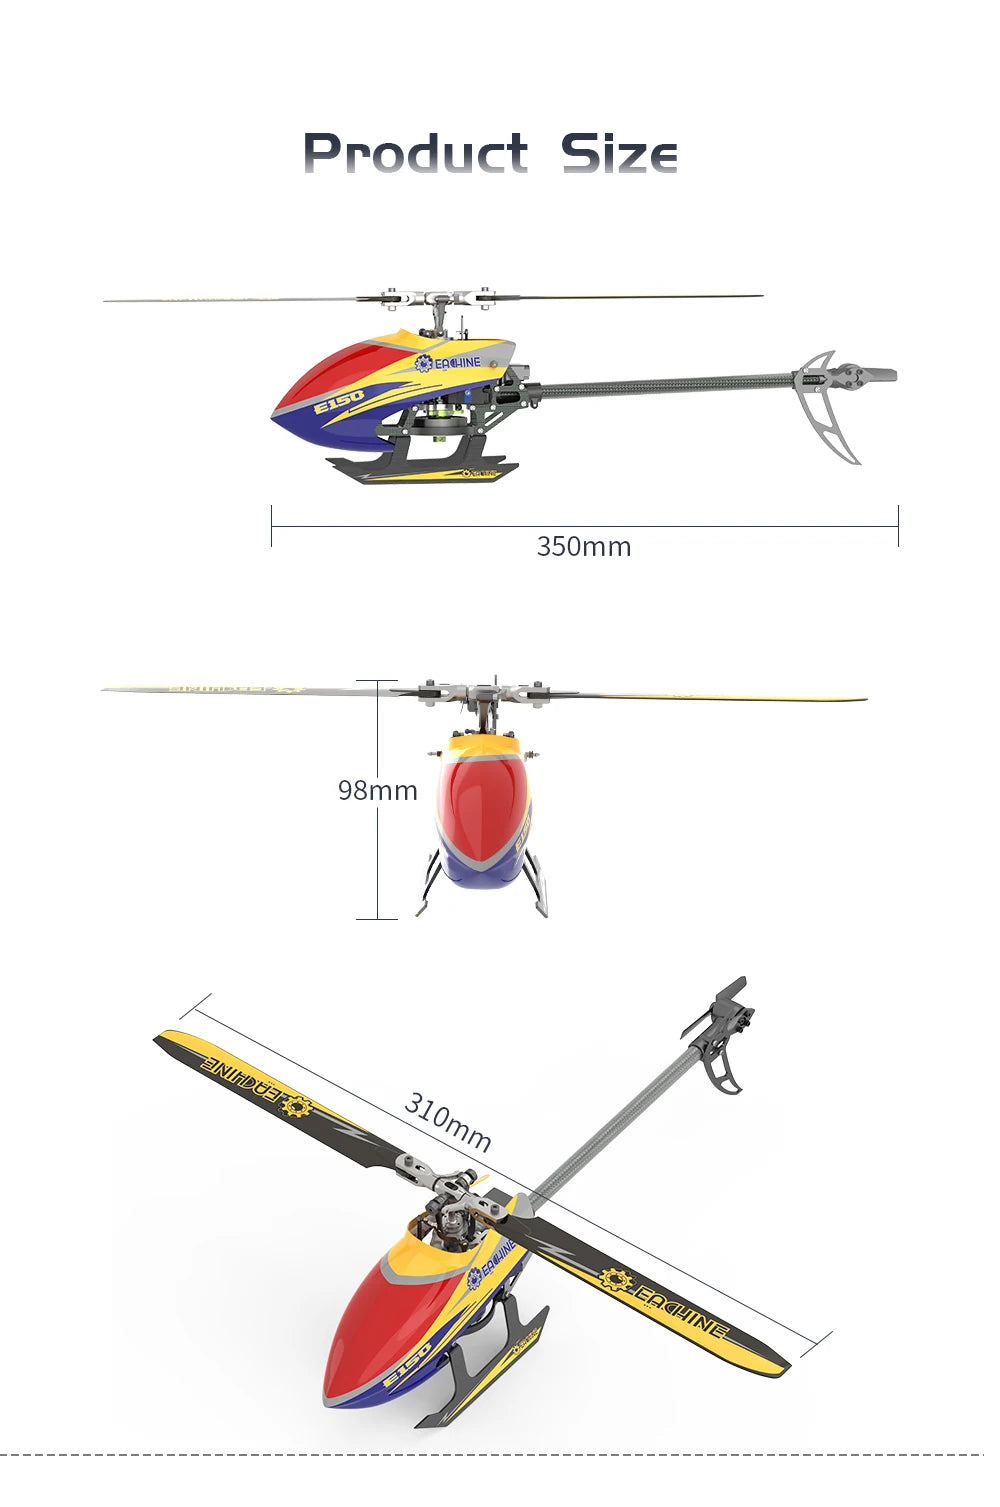 Eachine E150 RC Helicopter, EACHINE 350mm 98mm Znindu3g? 310mm '